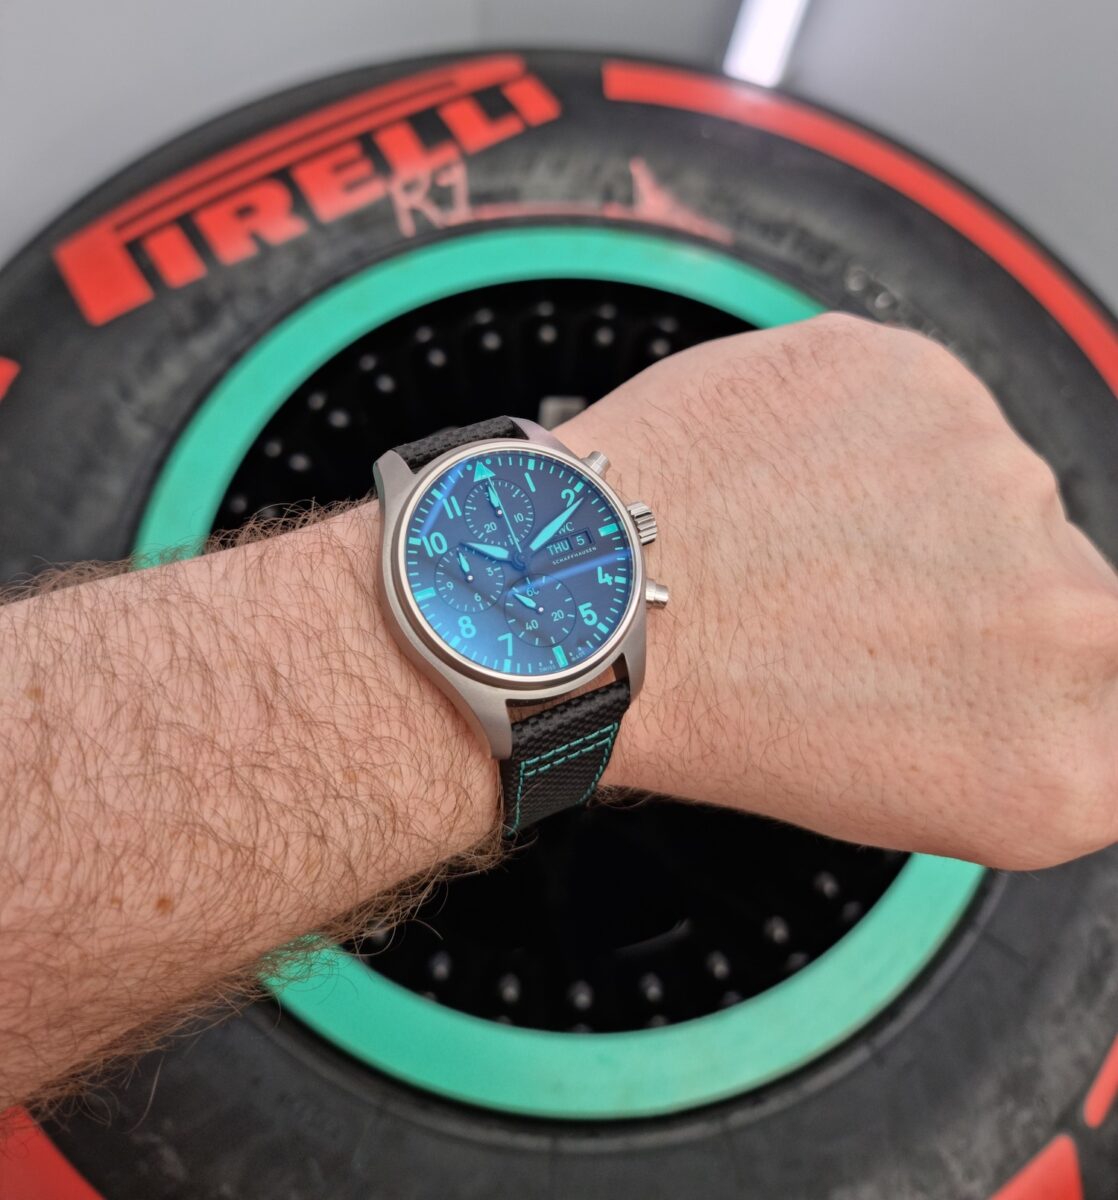 IWC Schaffhausen’s Mercedes Formula 1 Watch Will Drive Watch Fans Crazy